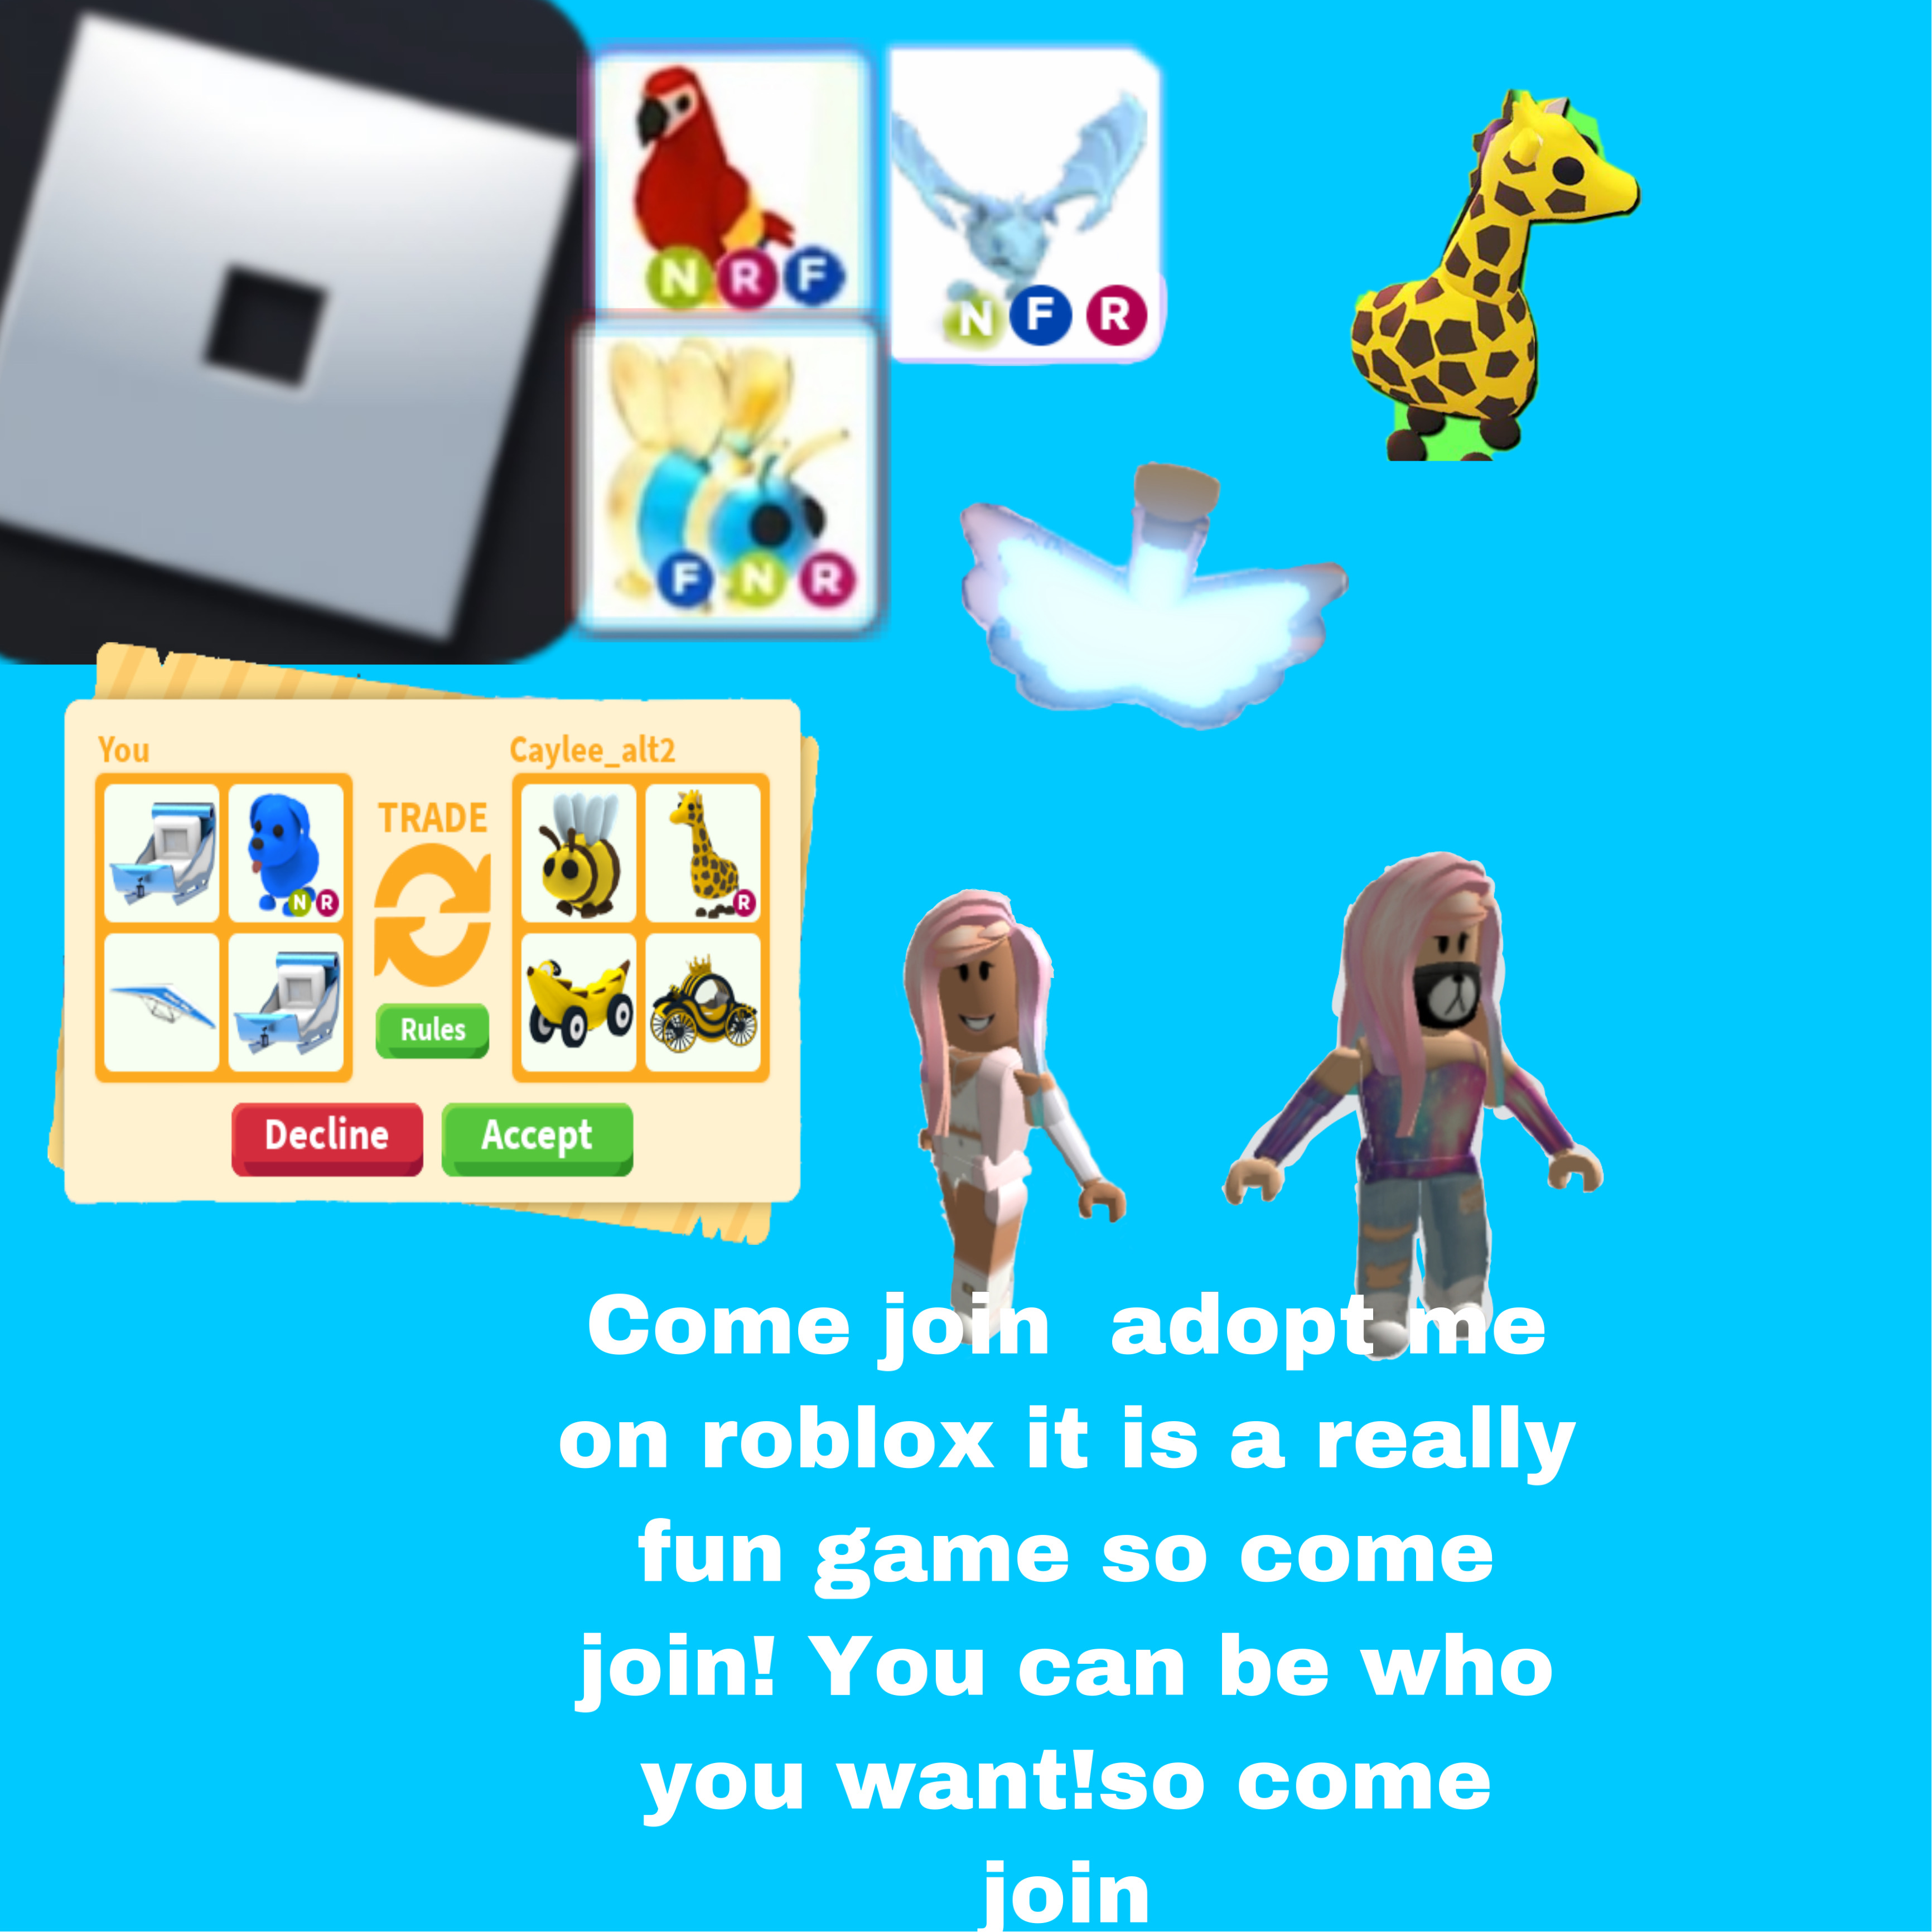 Roblox Adopt Me Image By Aqua - roblox it